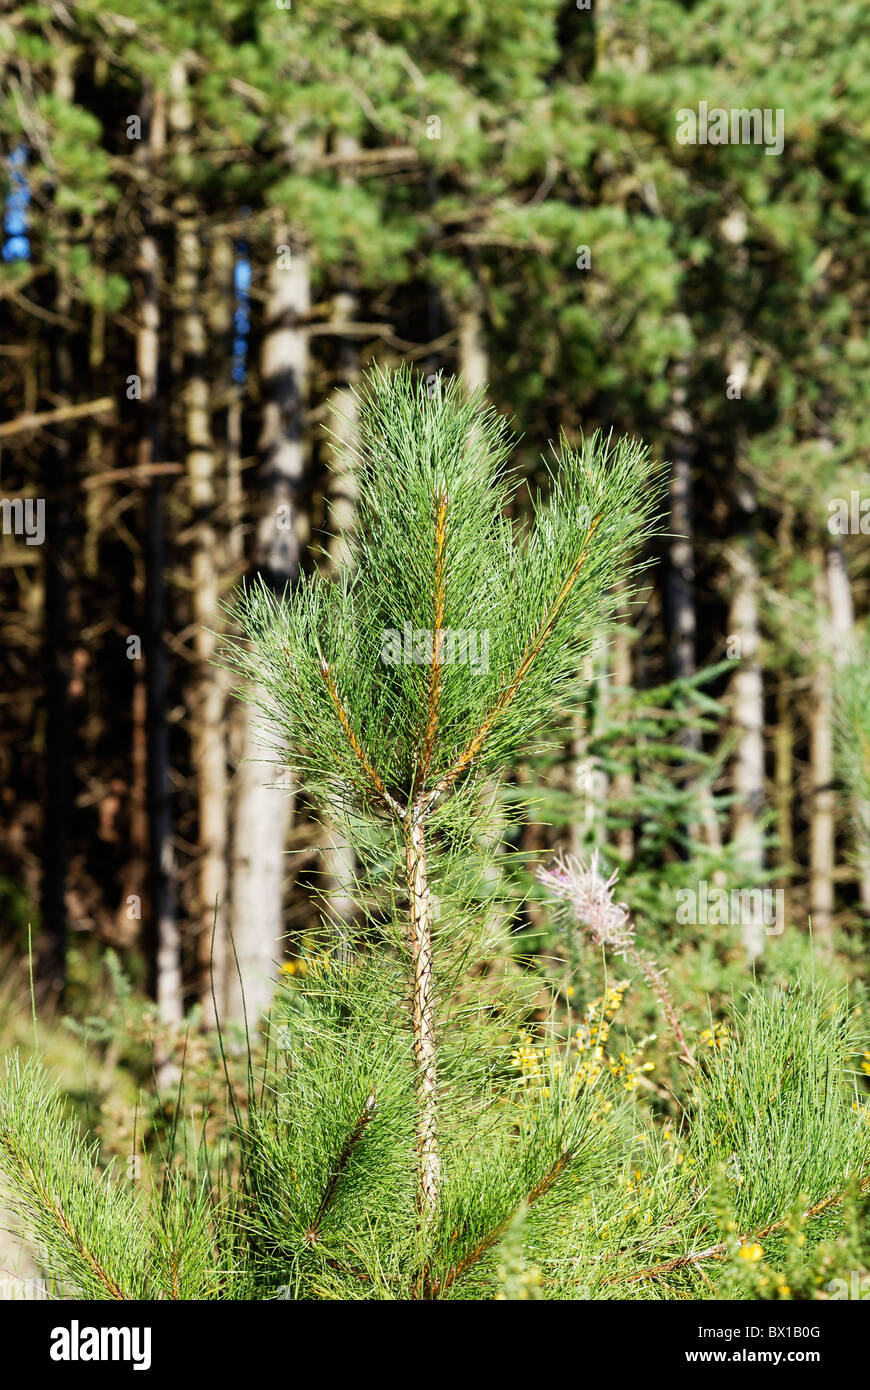 Natural regeneration of Pinus nigra, Corsican Pine tree at the edge of a mature plantation, Wales, UK. Stock Photo